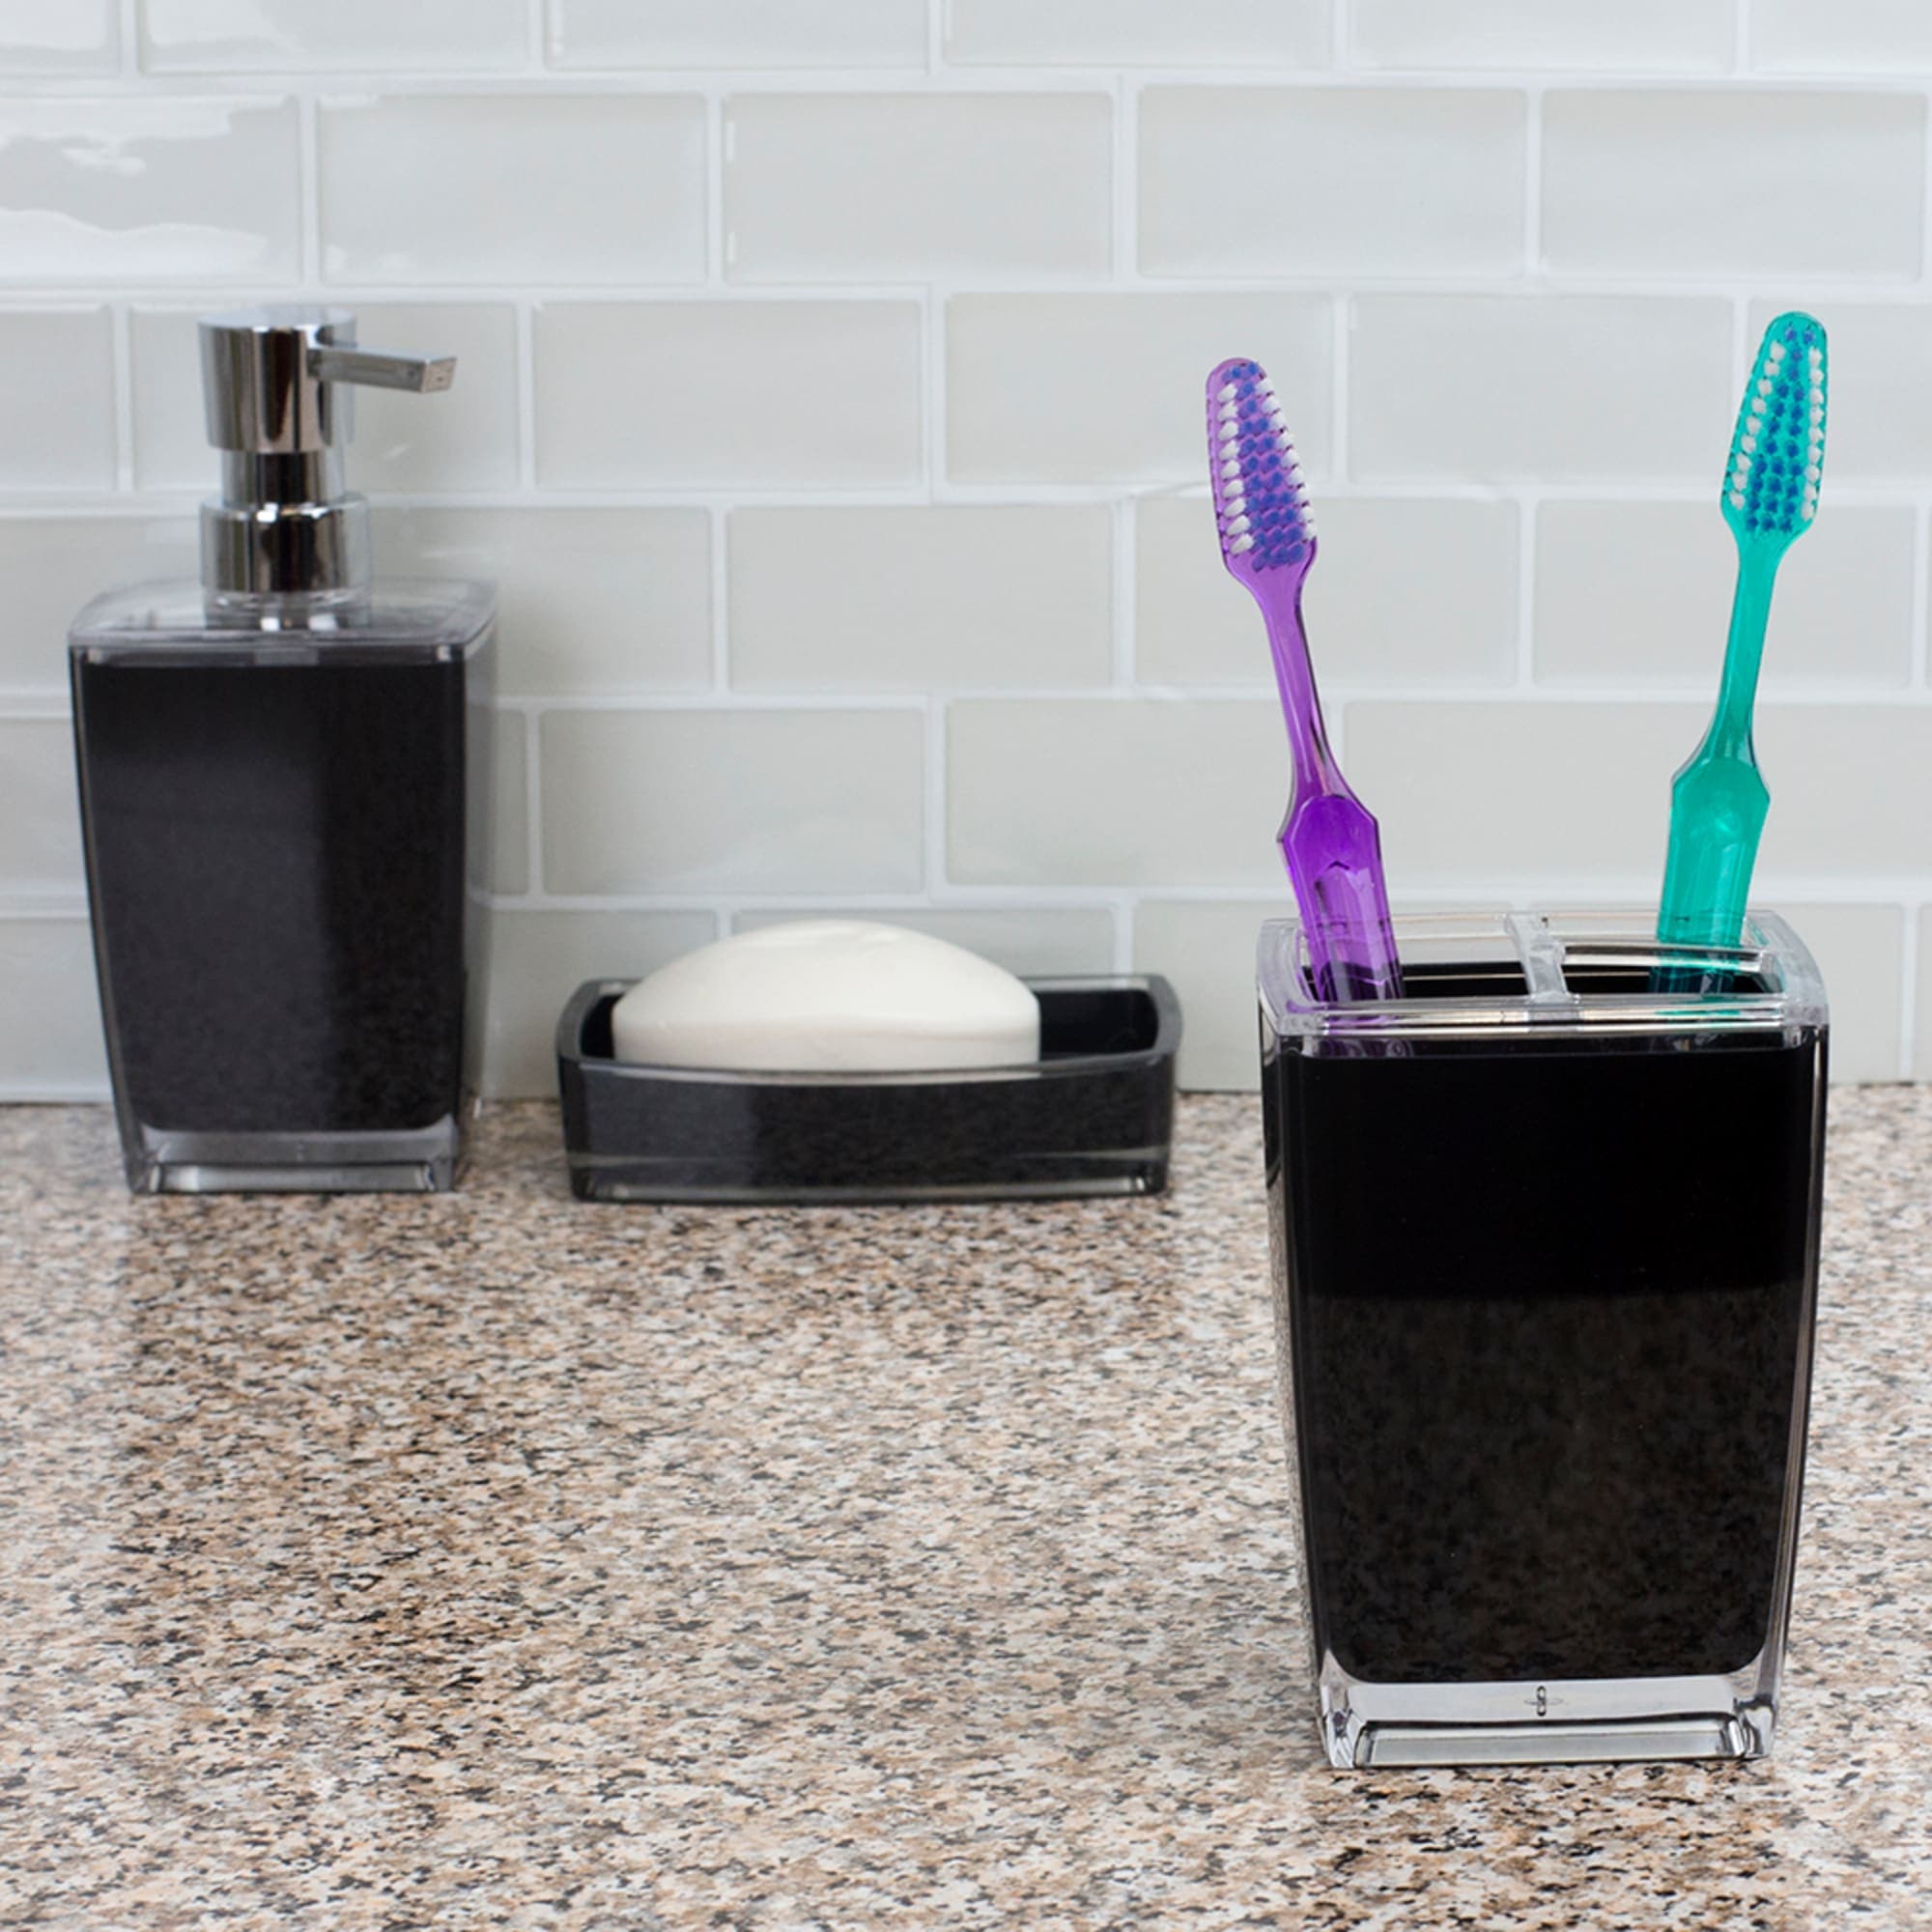 Home Basics Acrylic Plastic Toothbrush Holder, Black $3.00 EACH, CASE PACK OF 24